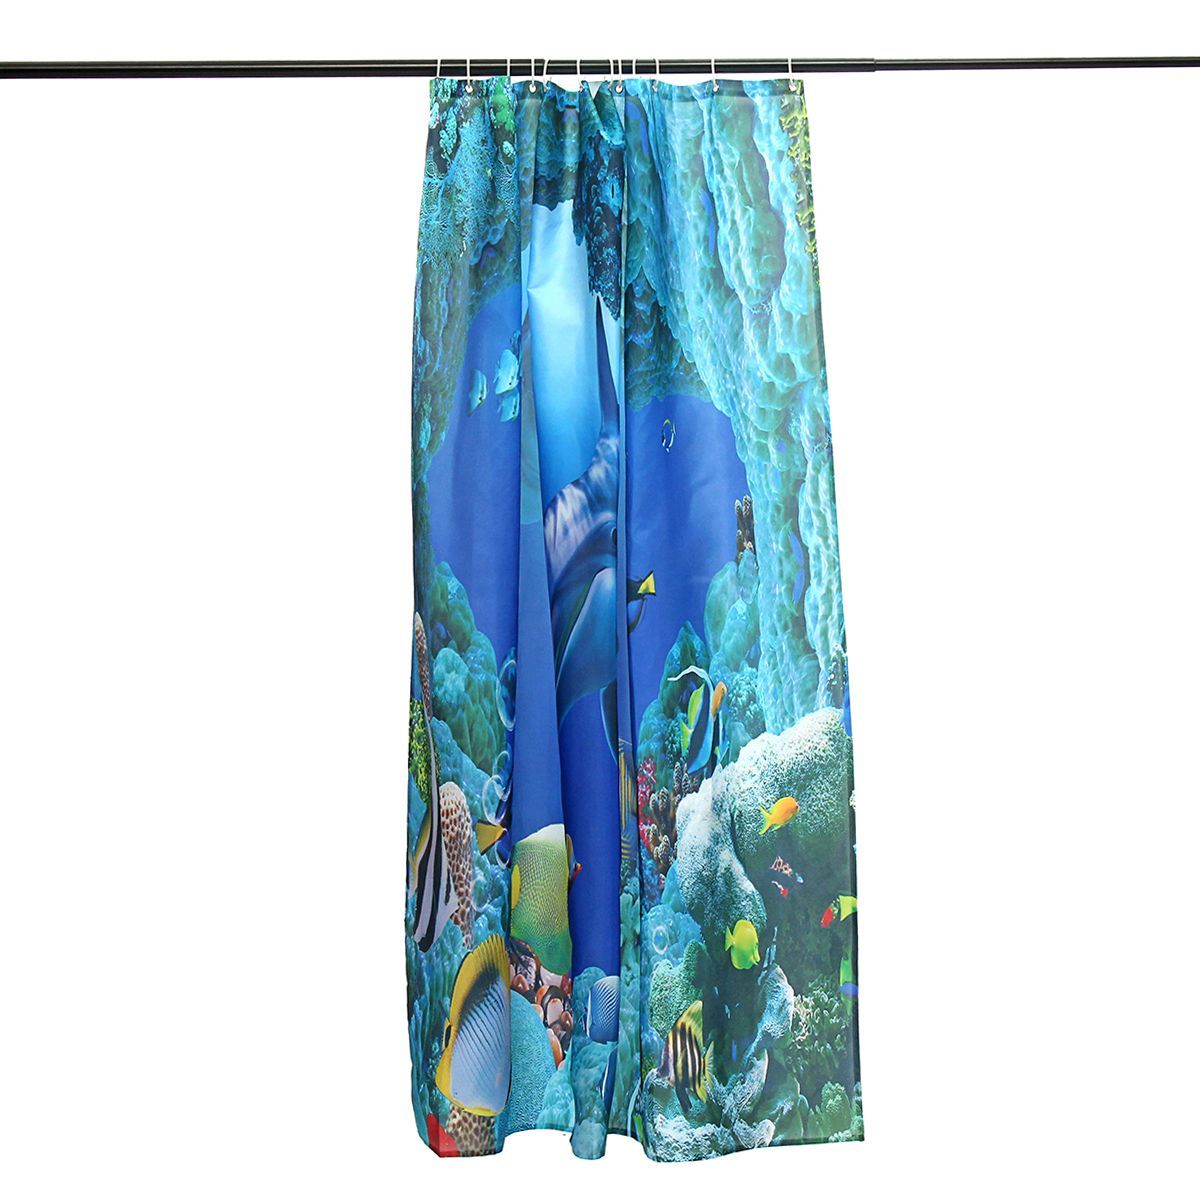 Dolphin-Ocean-Bathroom-Shower-Curtain-Bath-Mat-Toliet-Pedestal-Rug-Pad-Cover-1636694